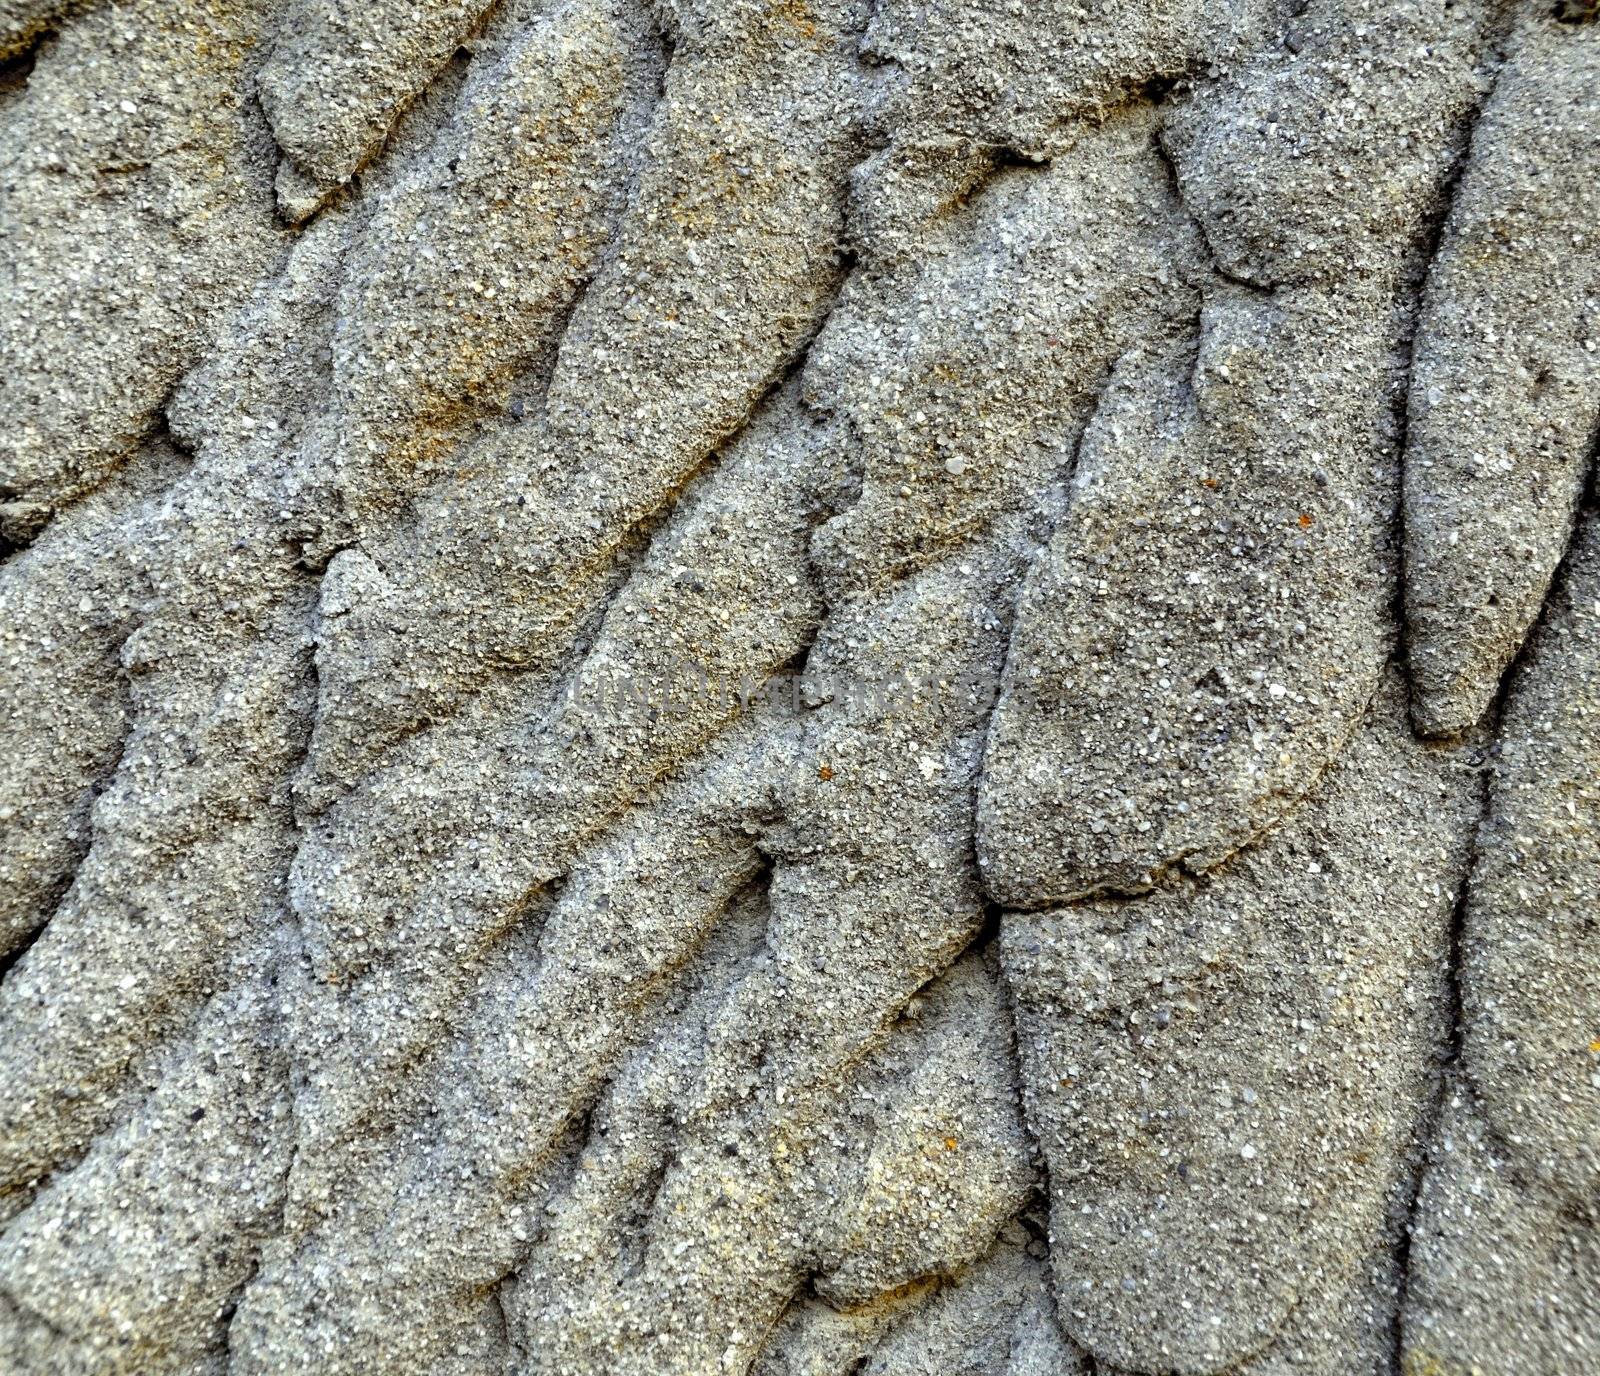 grit stone texture